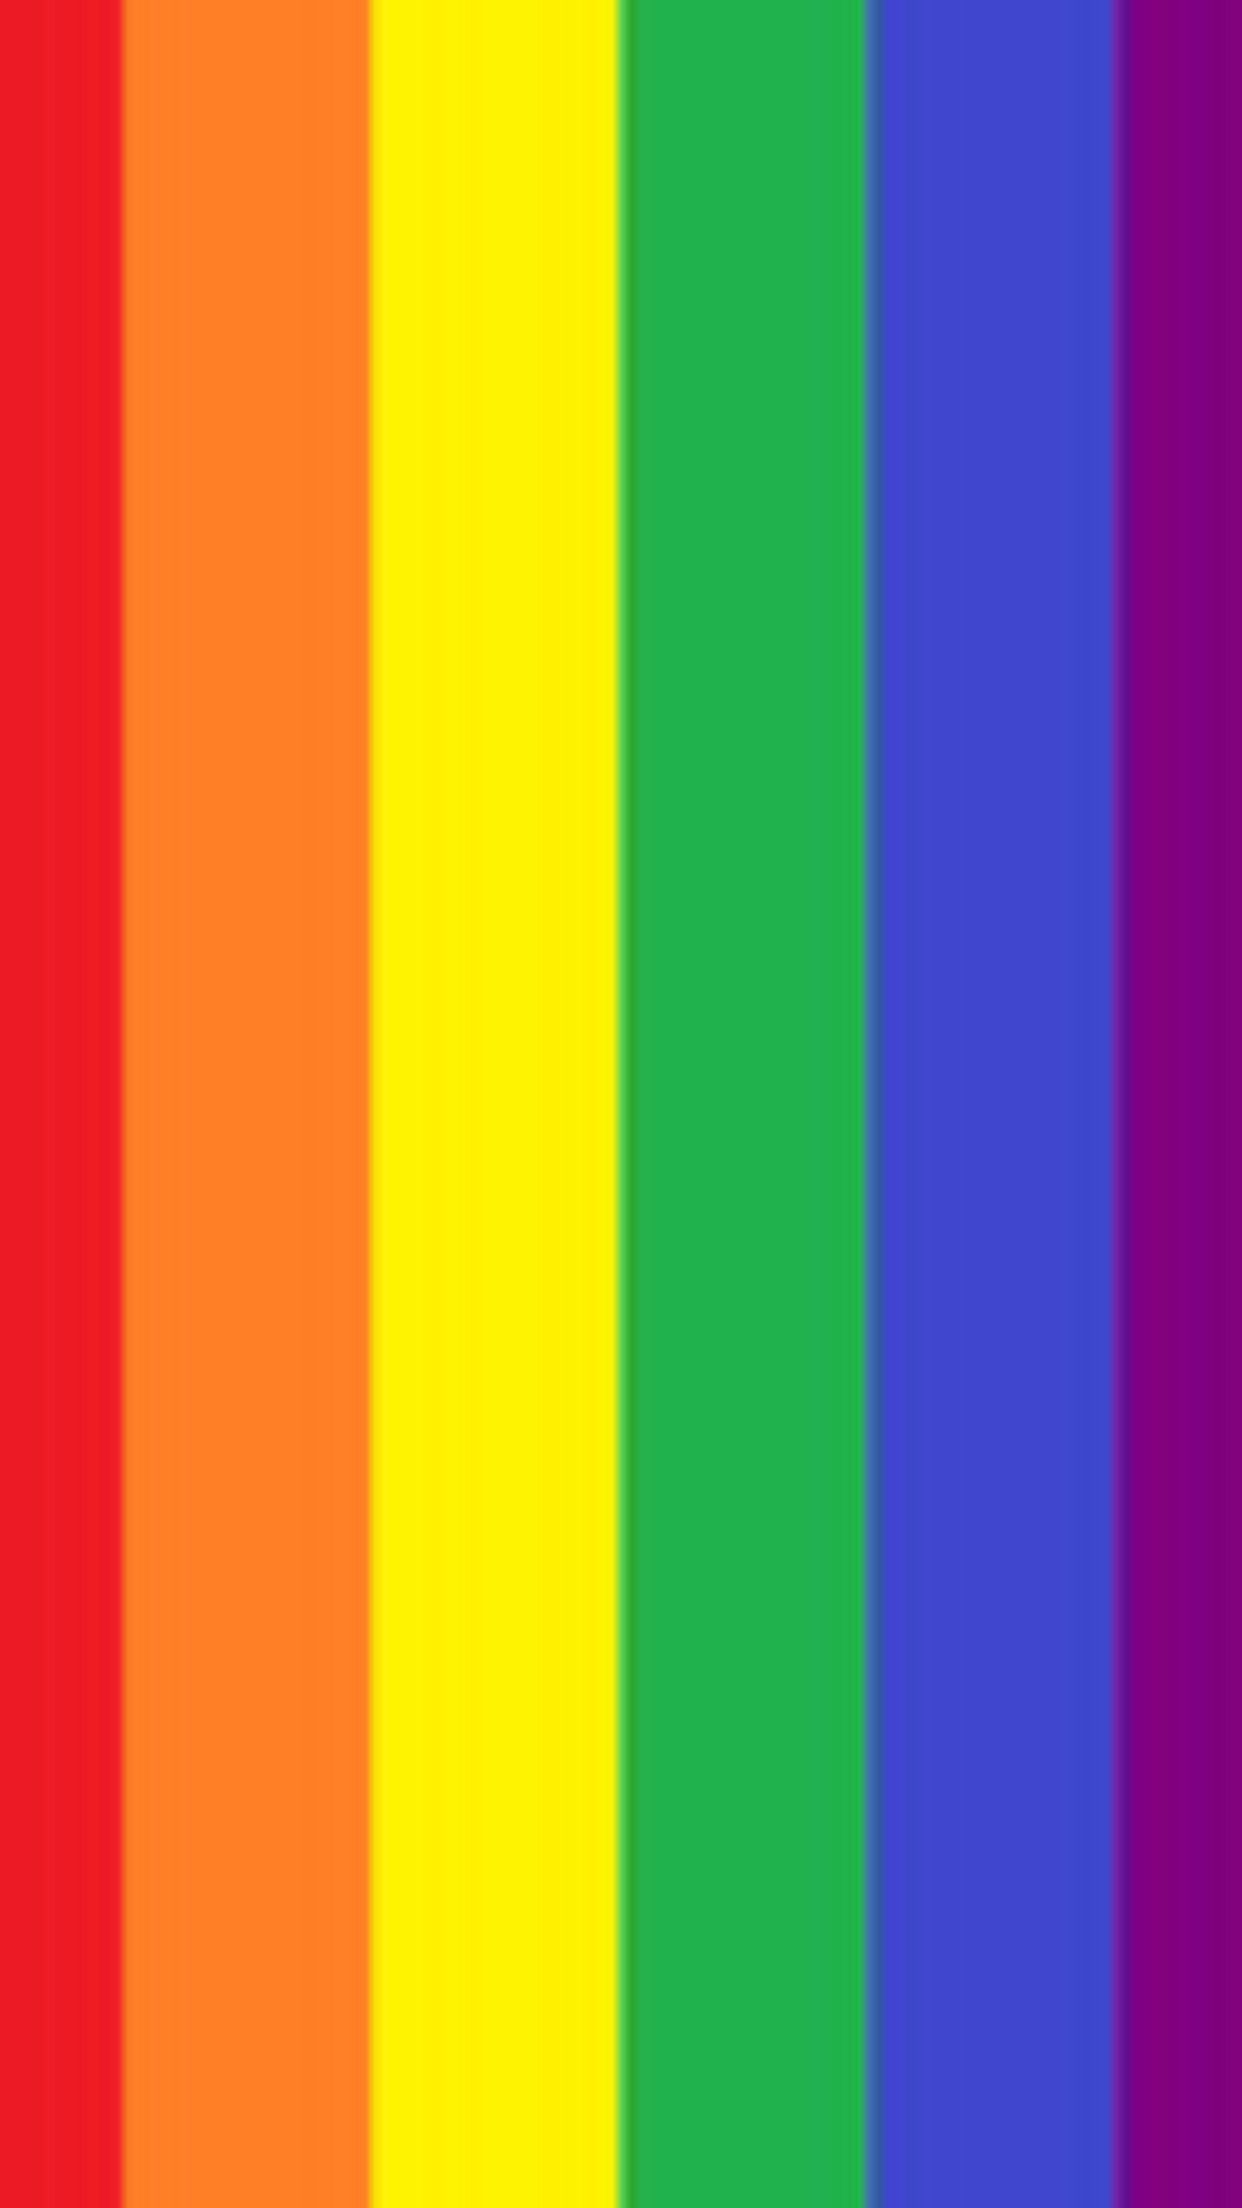 Rainbow Pride IPhone Wallpaper. iPhone wallpaper, Wallpaper, iPhone